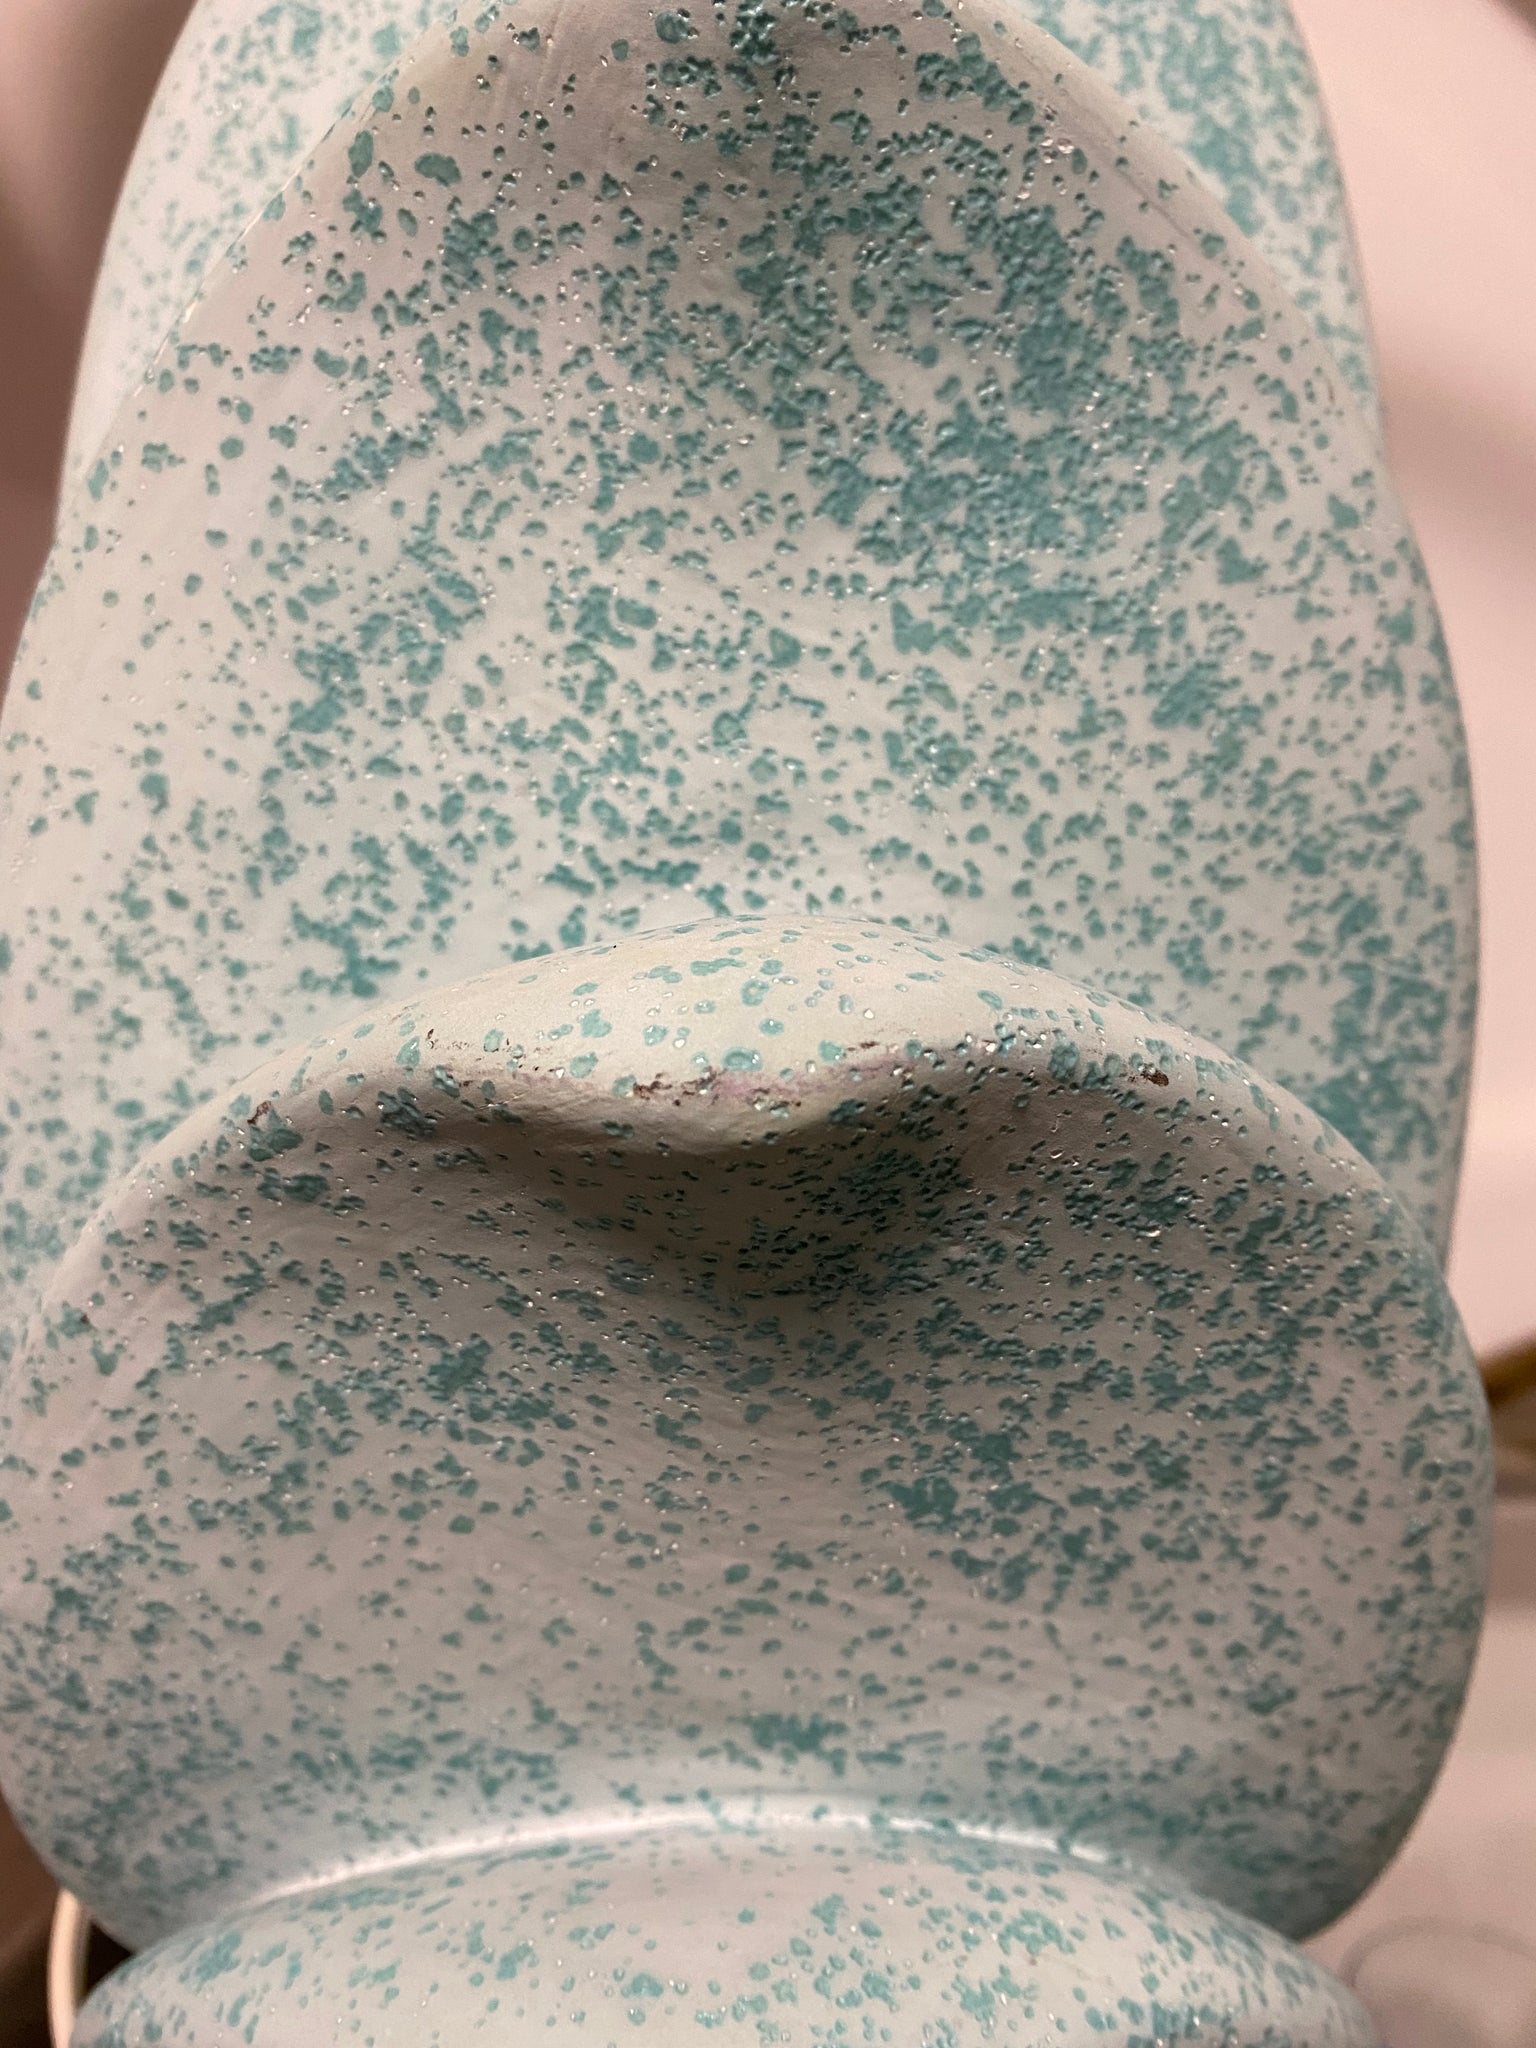 Speckled aqua blue ceramic wave art deco lamps